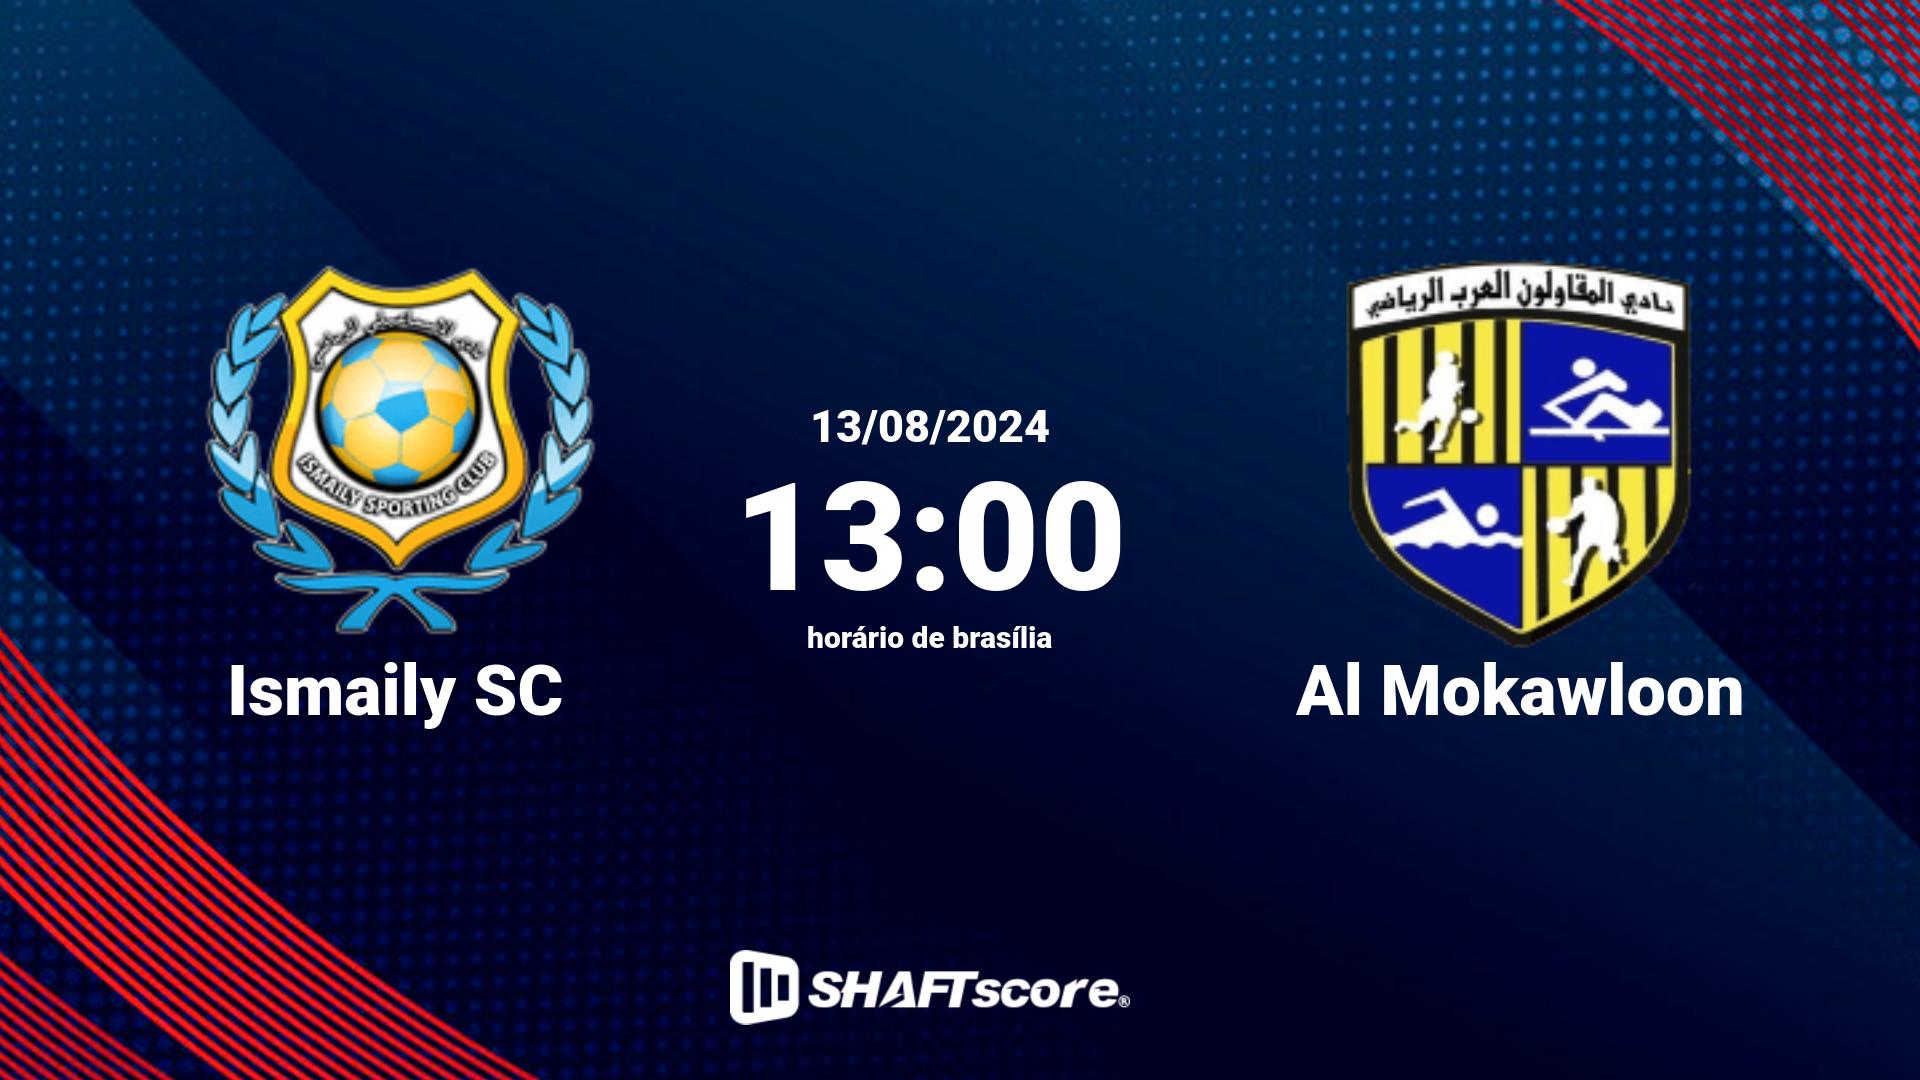 Estatísticas do jogo Ismaily SC vs Al Mokawloon 13.08 13:00